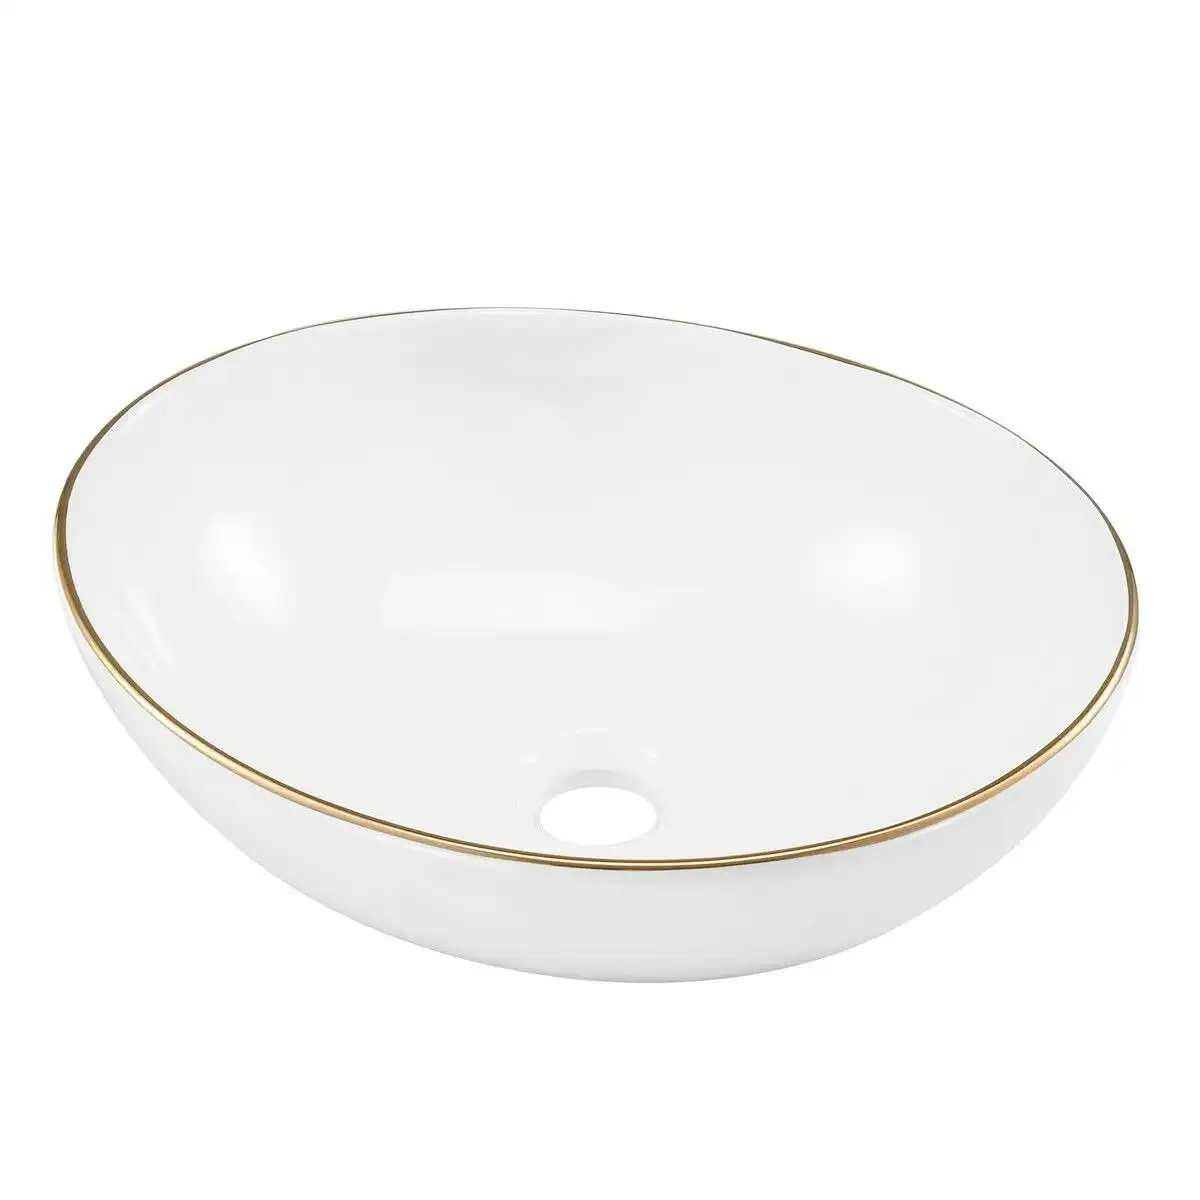 LUXSUITE White Bathroom Sink Vessel Wash Basin Washing Vanity Bowl Above Counter Hand Toilet Bath Countertop Modern Oval Ceramic